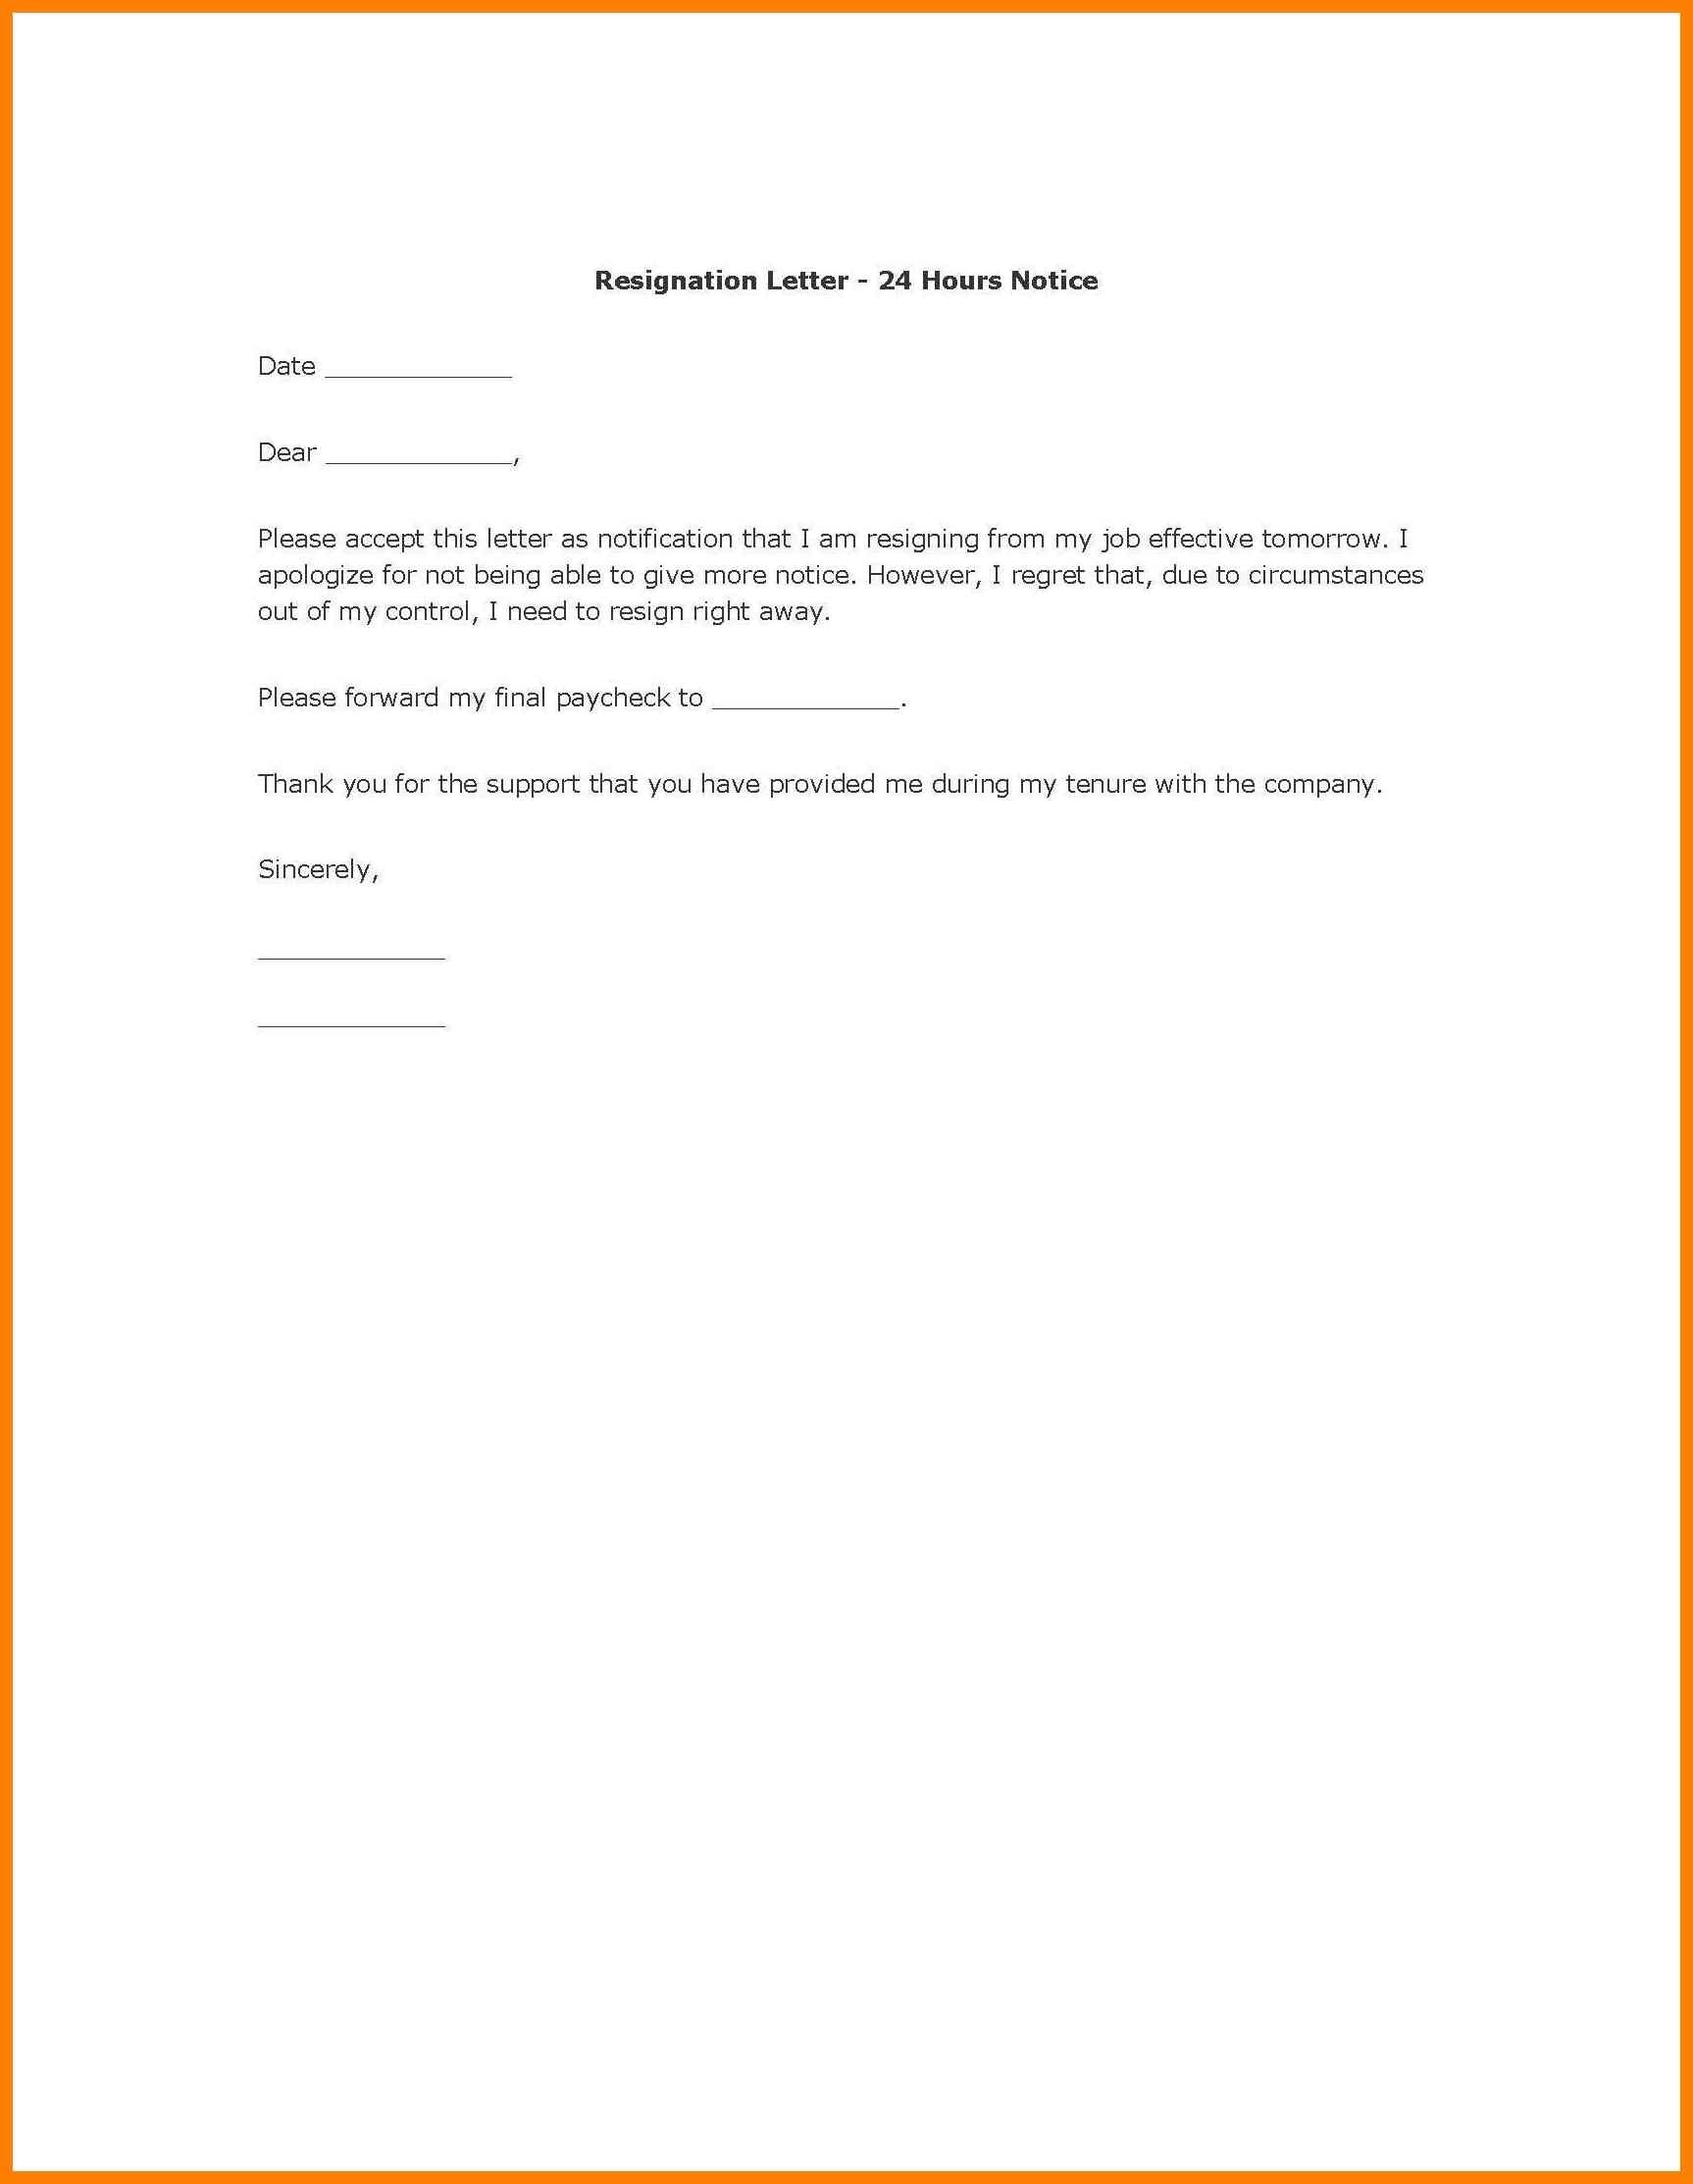 Sample Resignation Letter Format Malaysia Copy Simp Epic Sample 